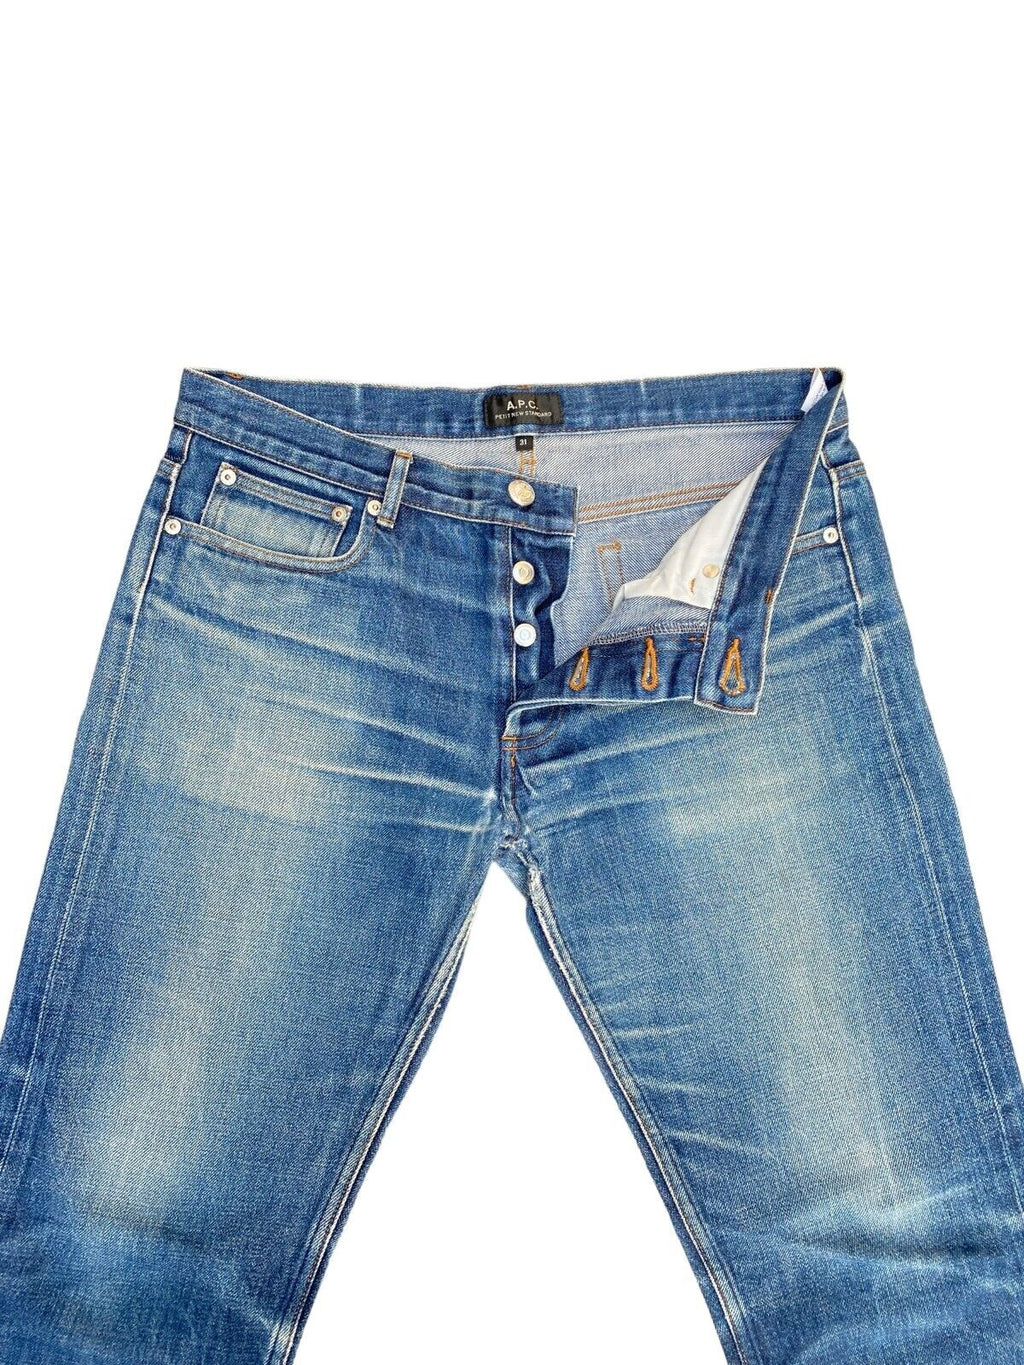 Butler denim jeans Petit New Standard